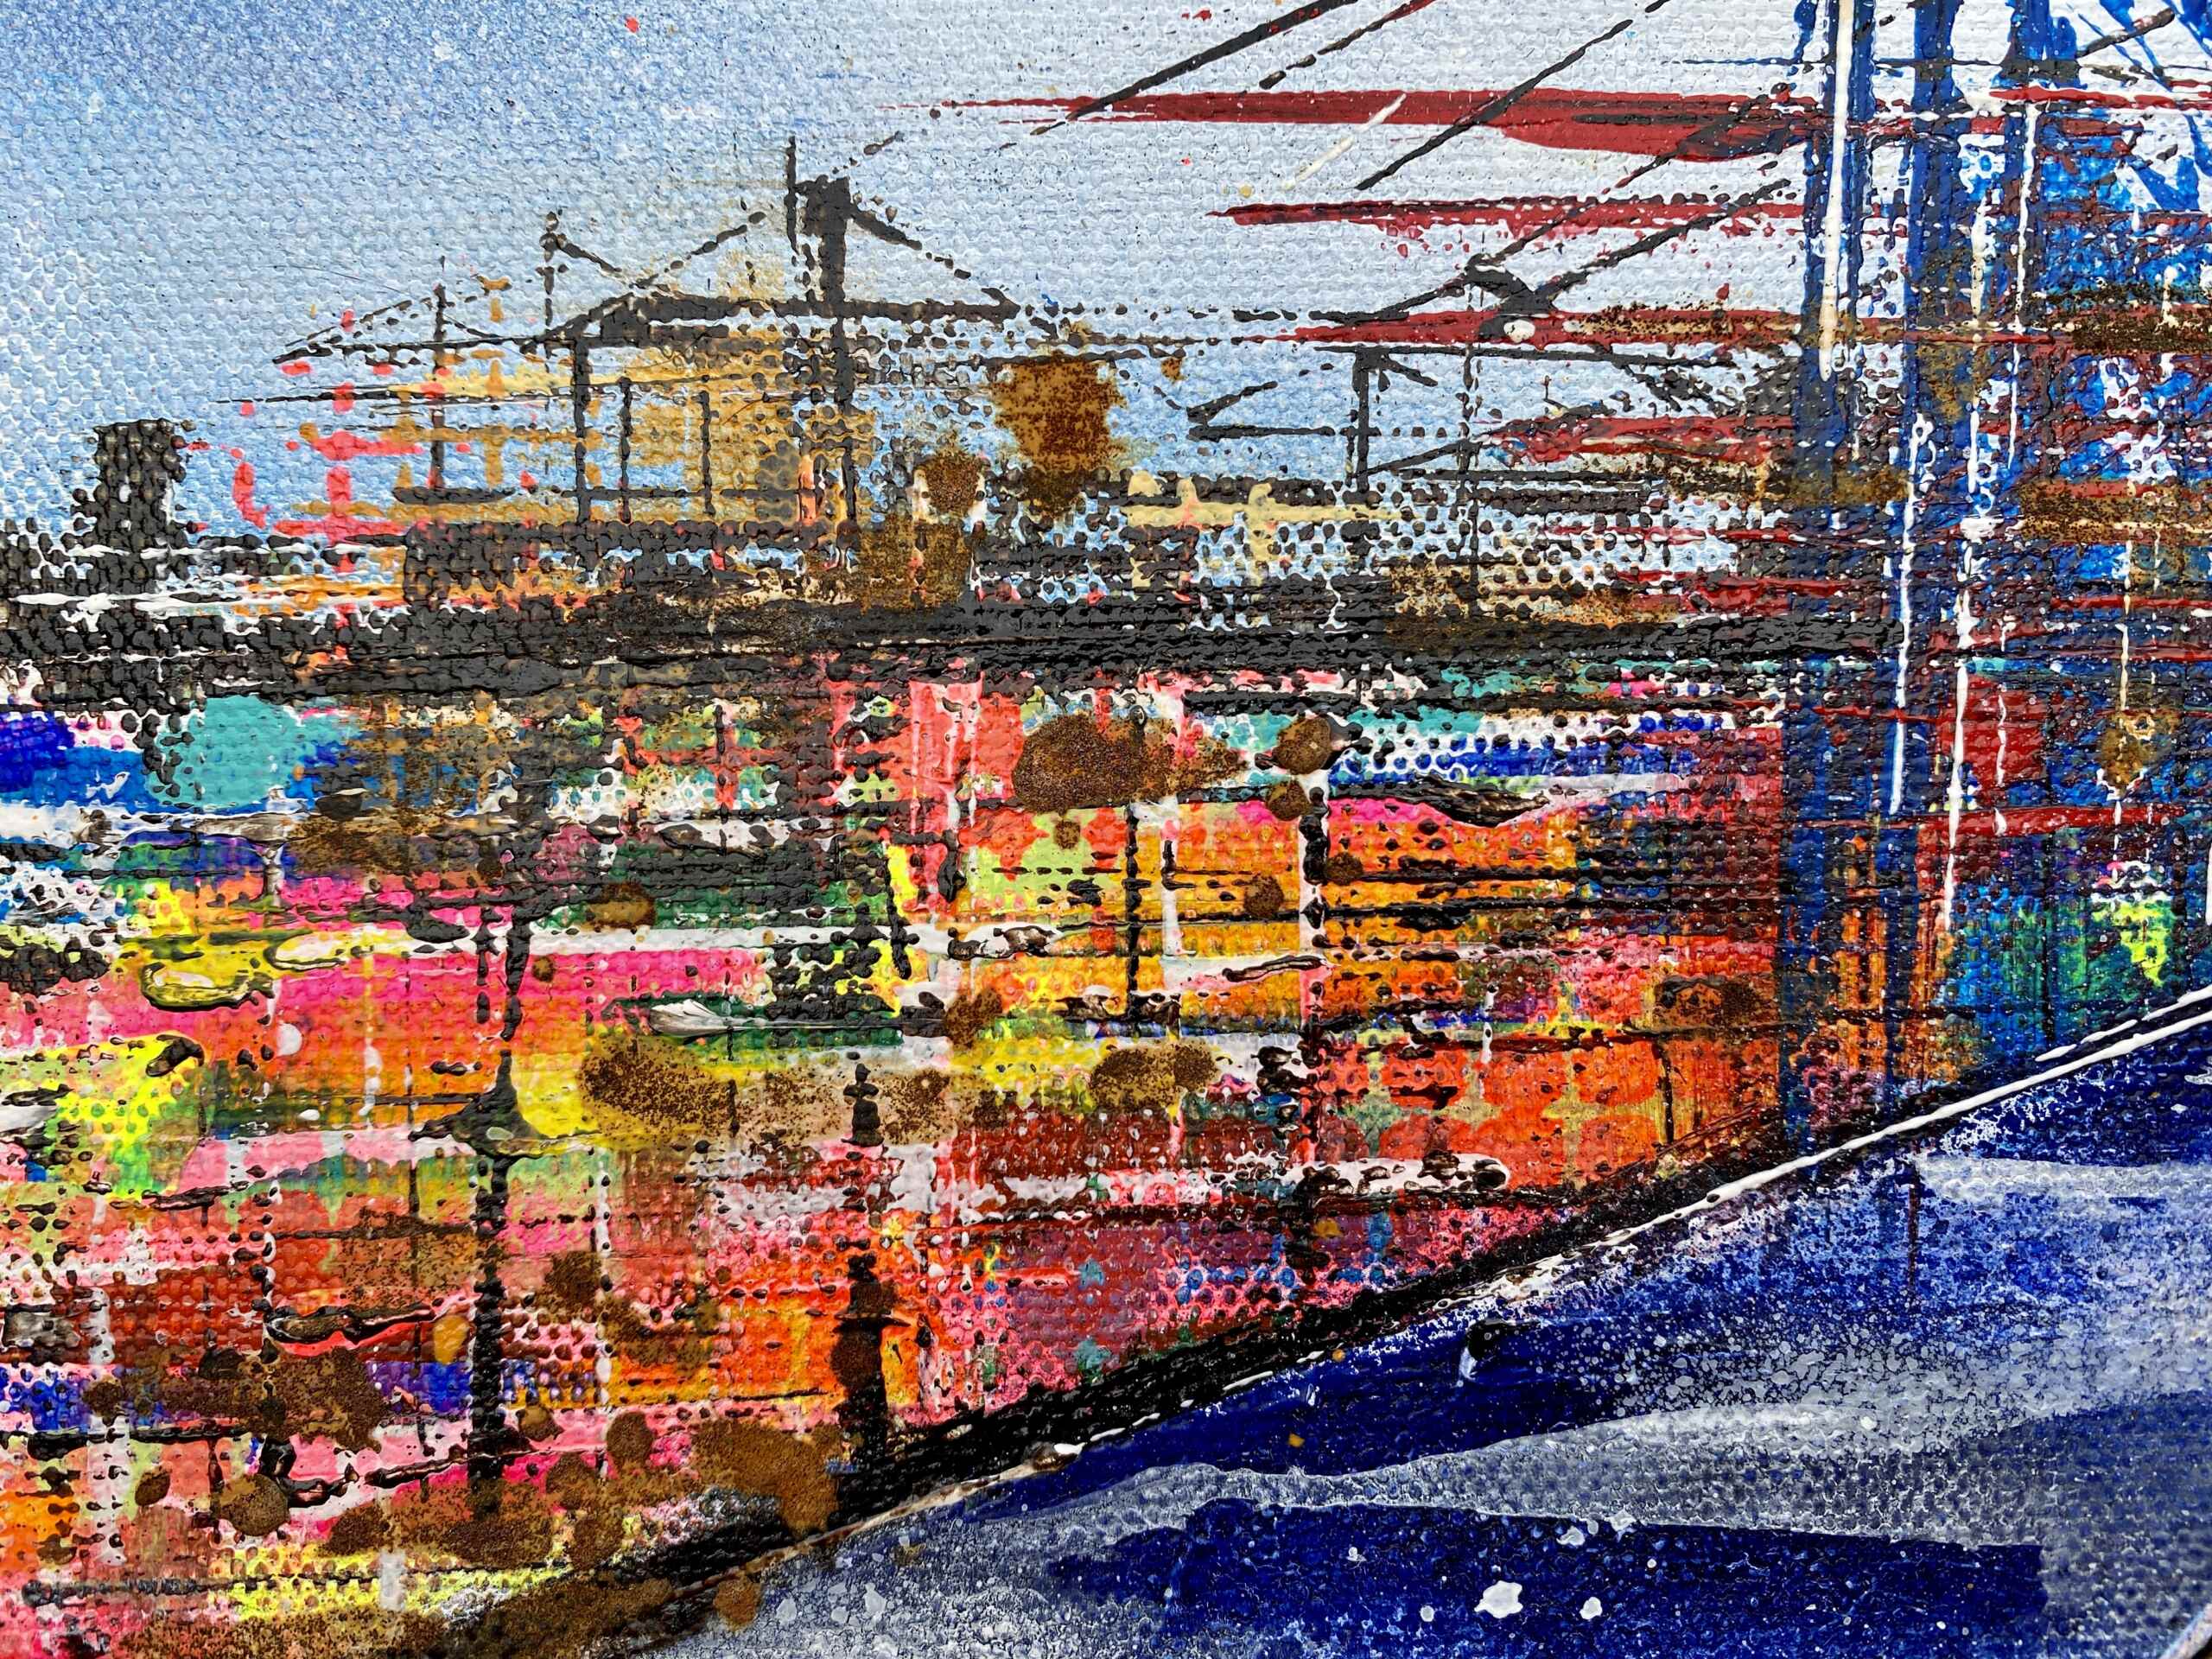 Details of artwork "Dock No 9“ by Nina Groth